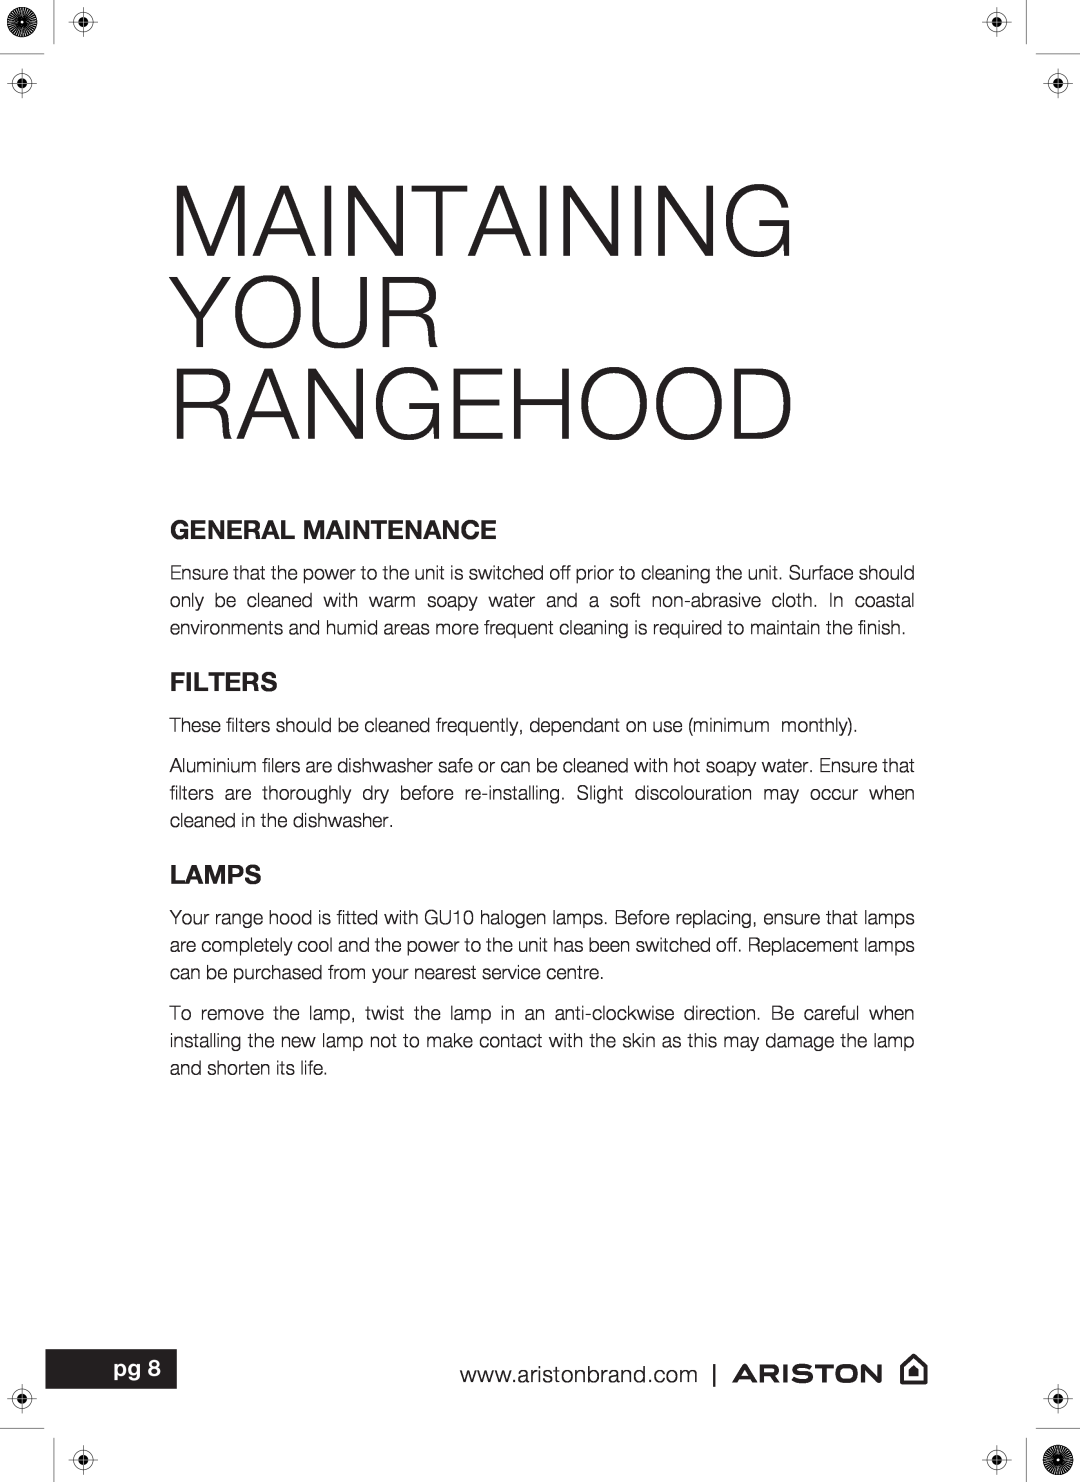 Ariston ARU75X, ARU52X user manual Maintaining Your Rangehood, General Maintenance, Filters, Lamps 